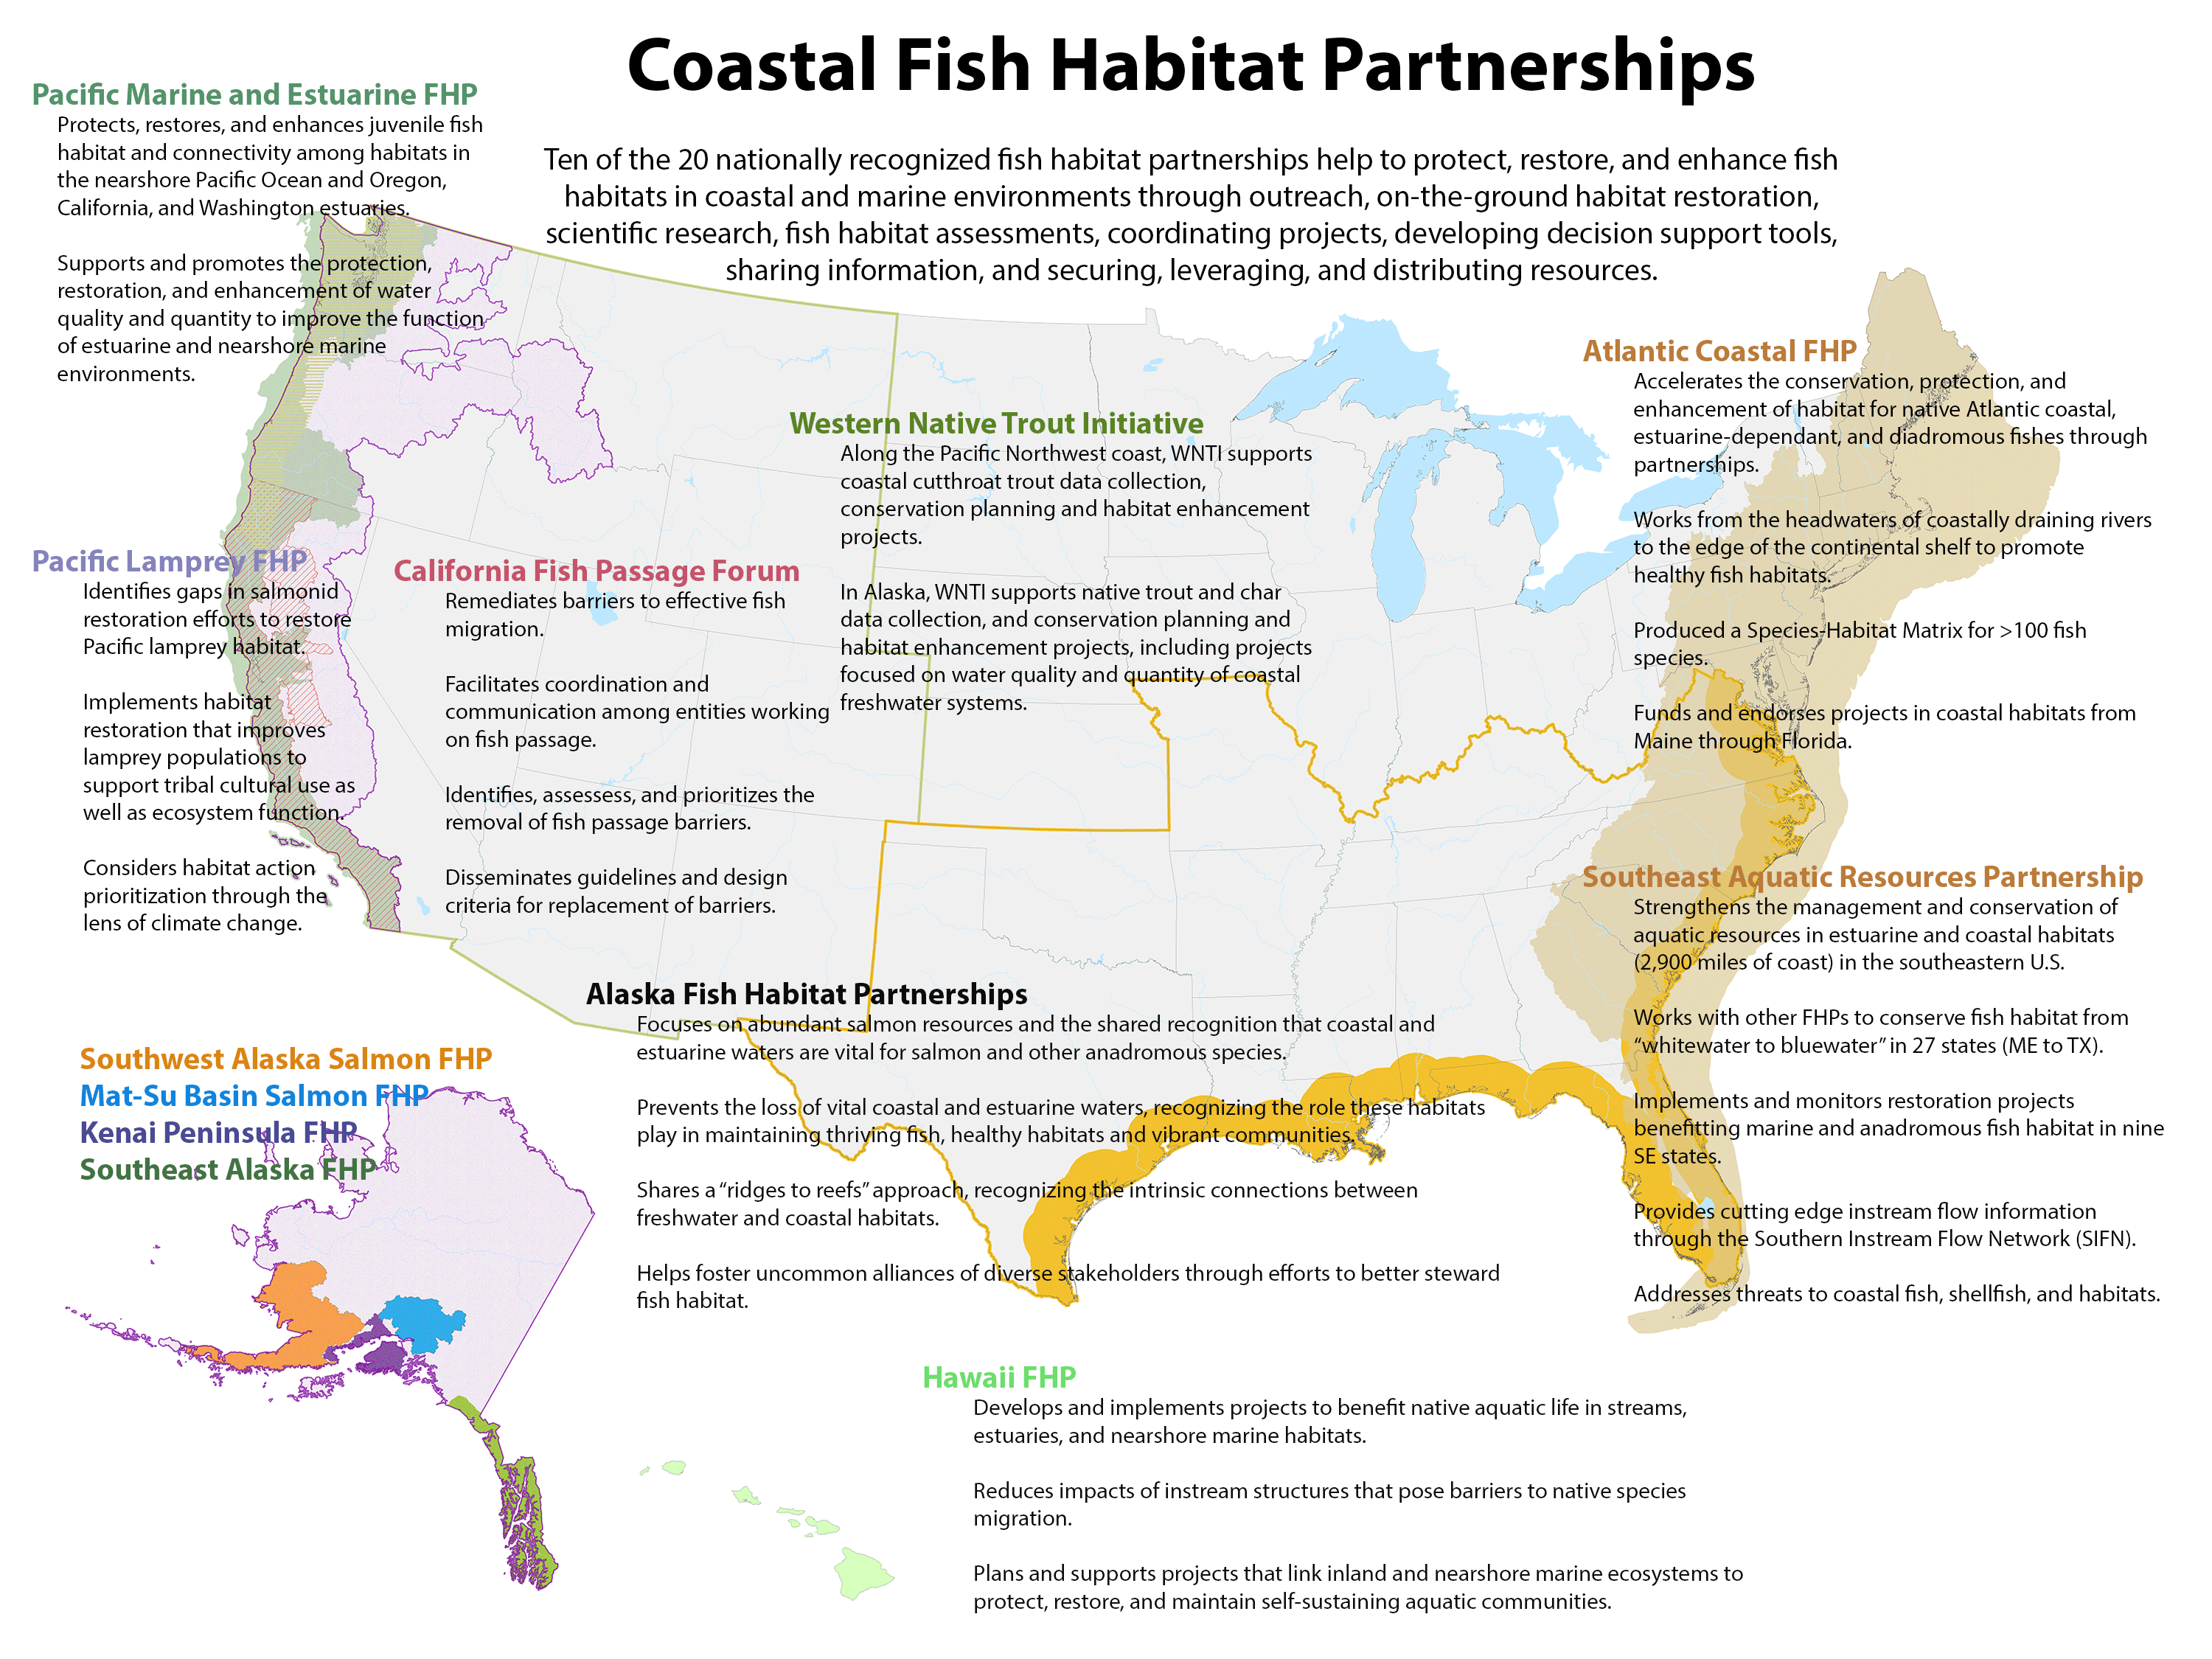 Coastal FHP map